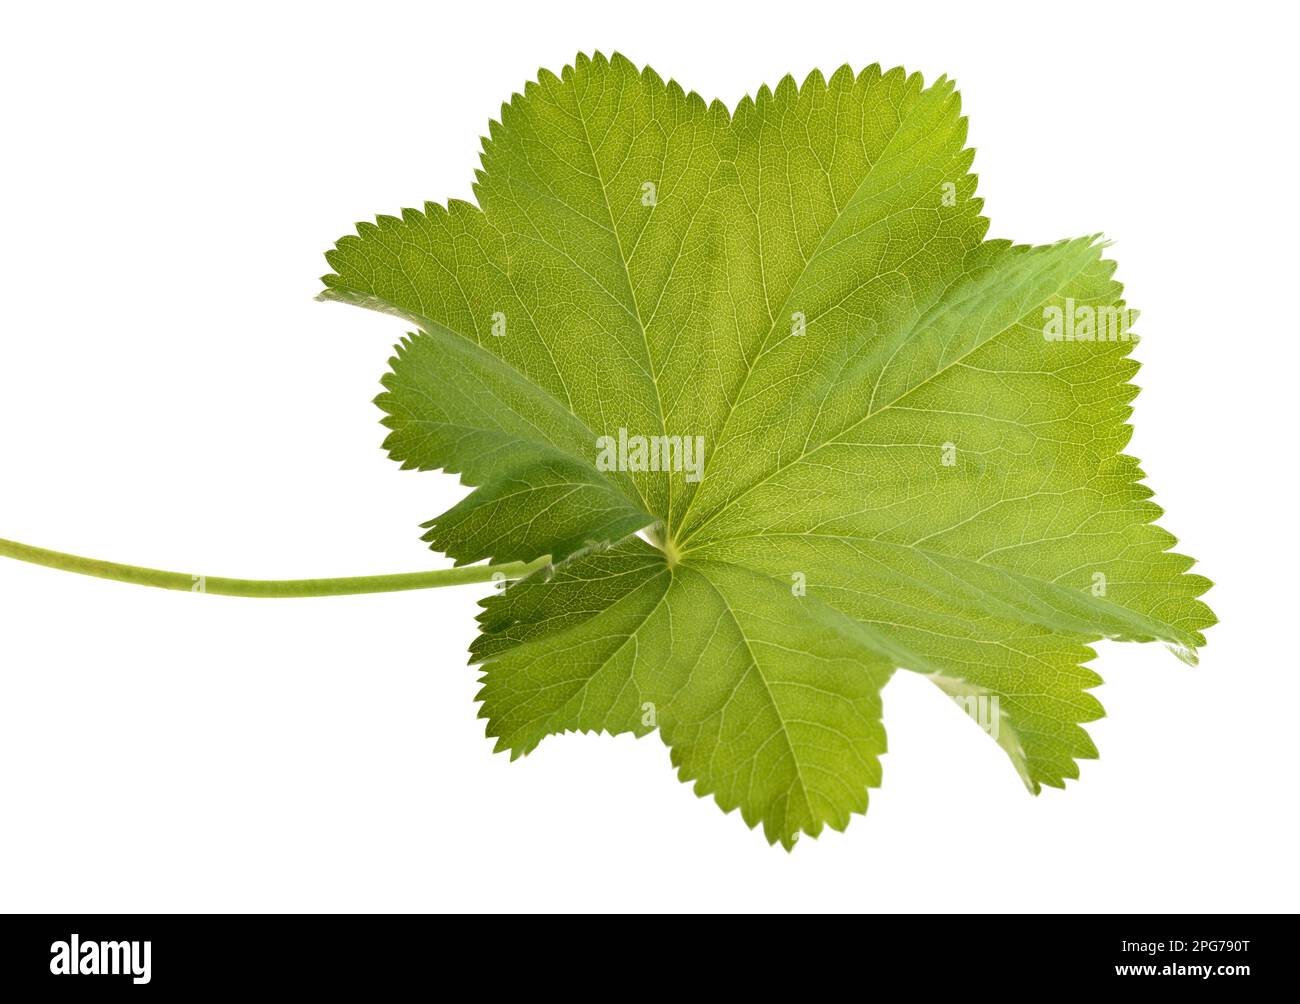 Lady's Mantle leaf isolated on white Stock Photo